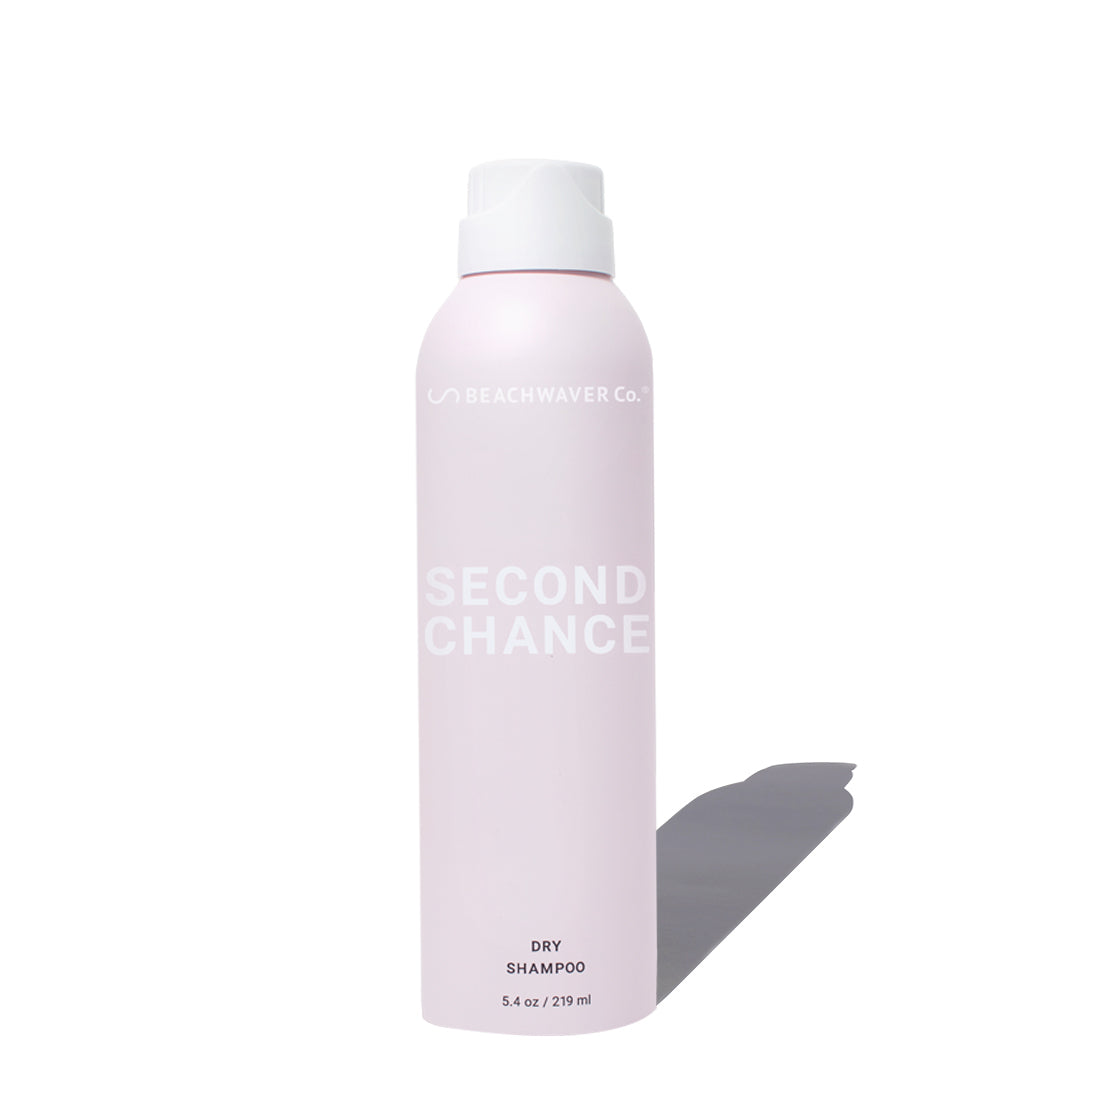 Second Chance Dry Shampoo - The Beachwaver Co.